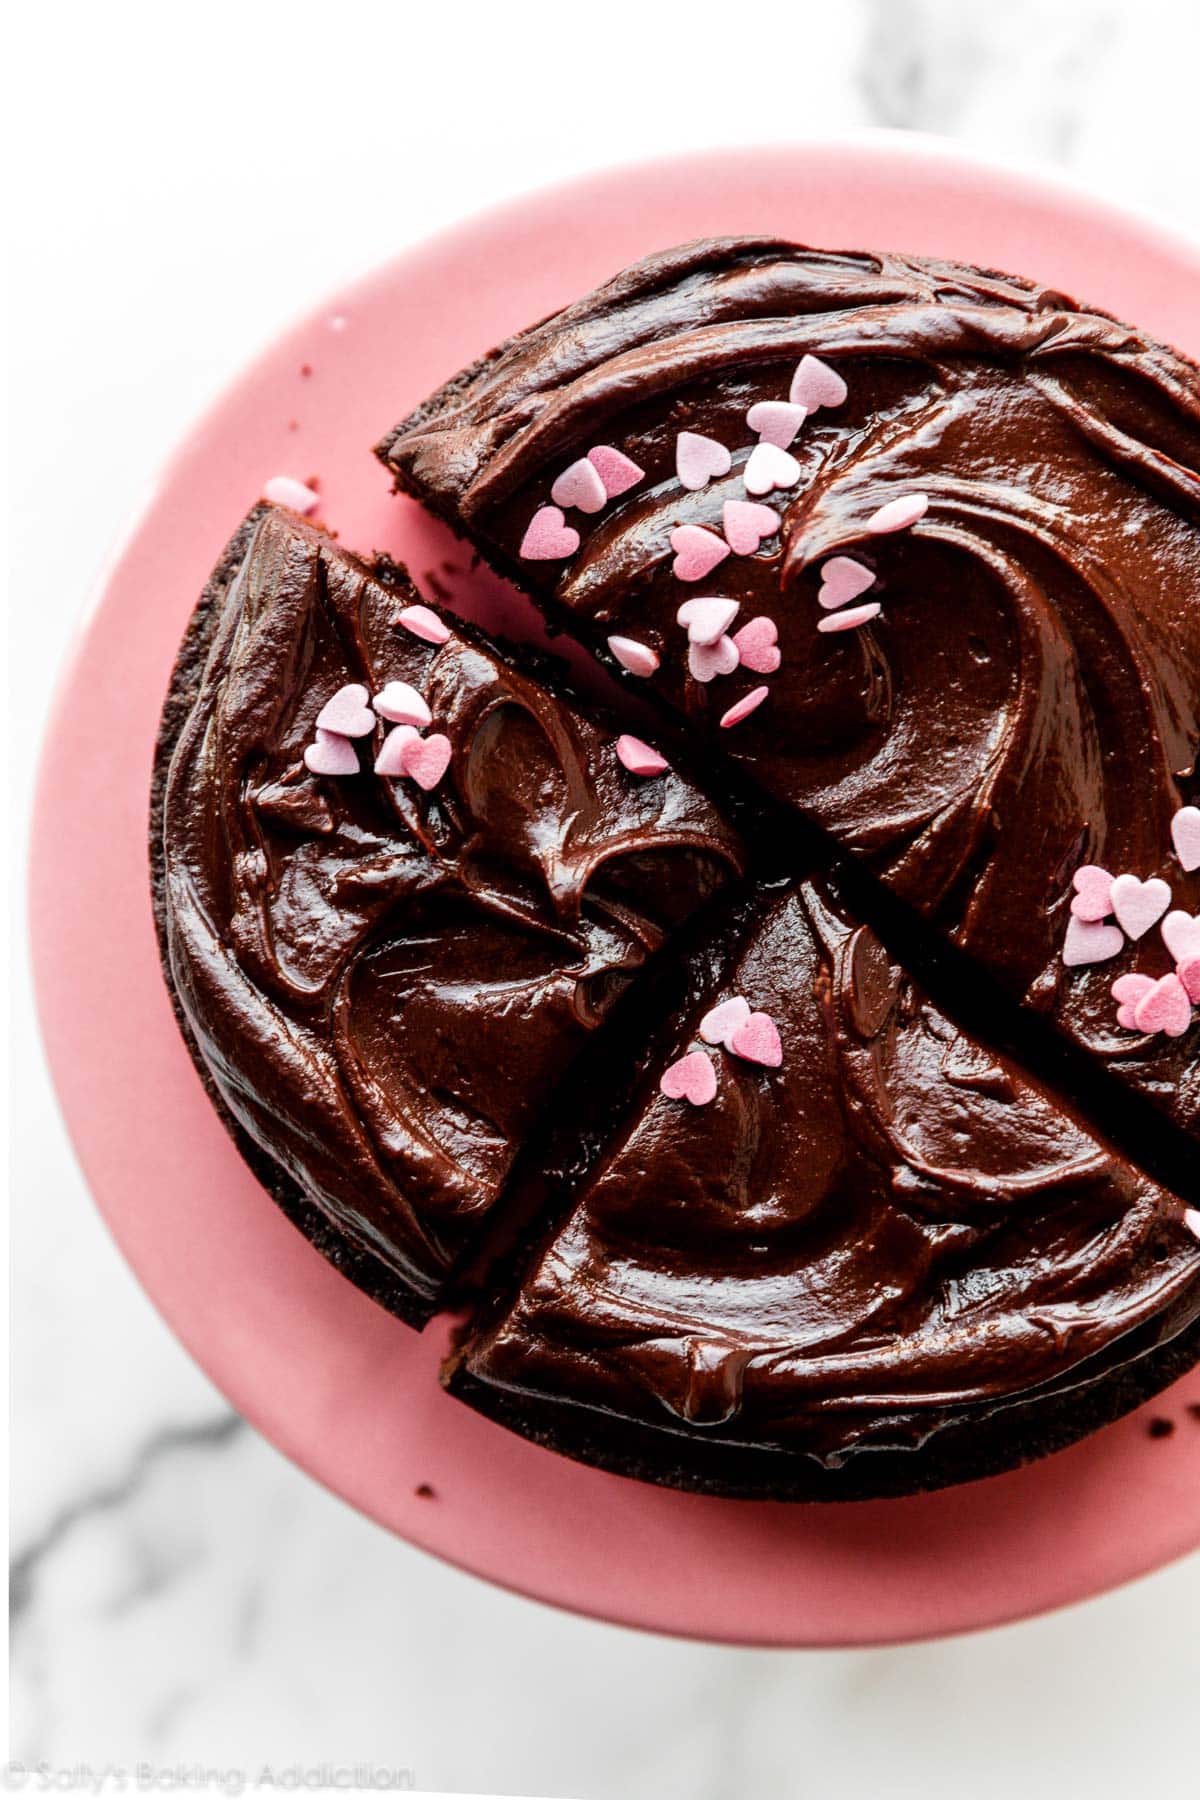 photo of chocolate ganache և pink heart sprinkled on chocolate cake